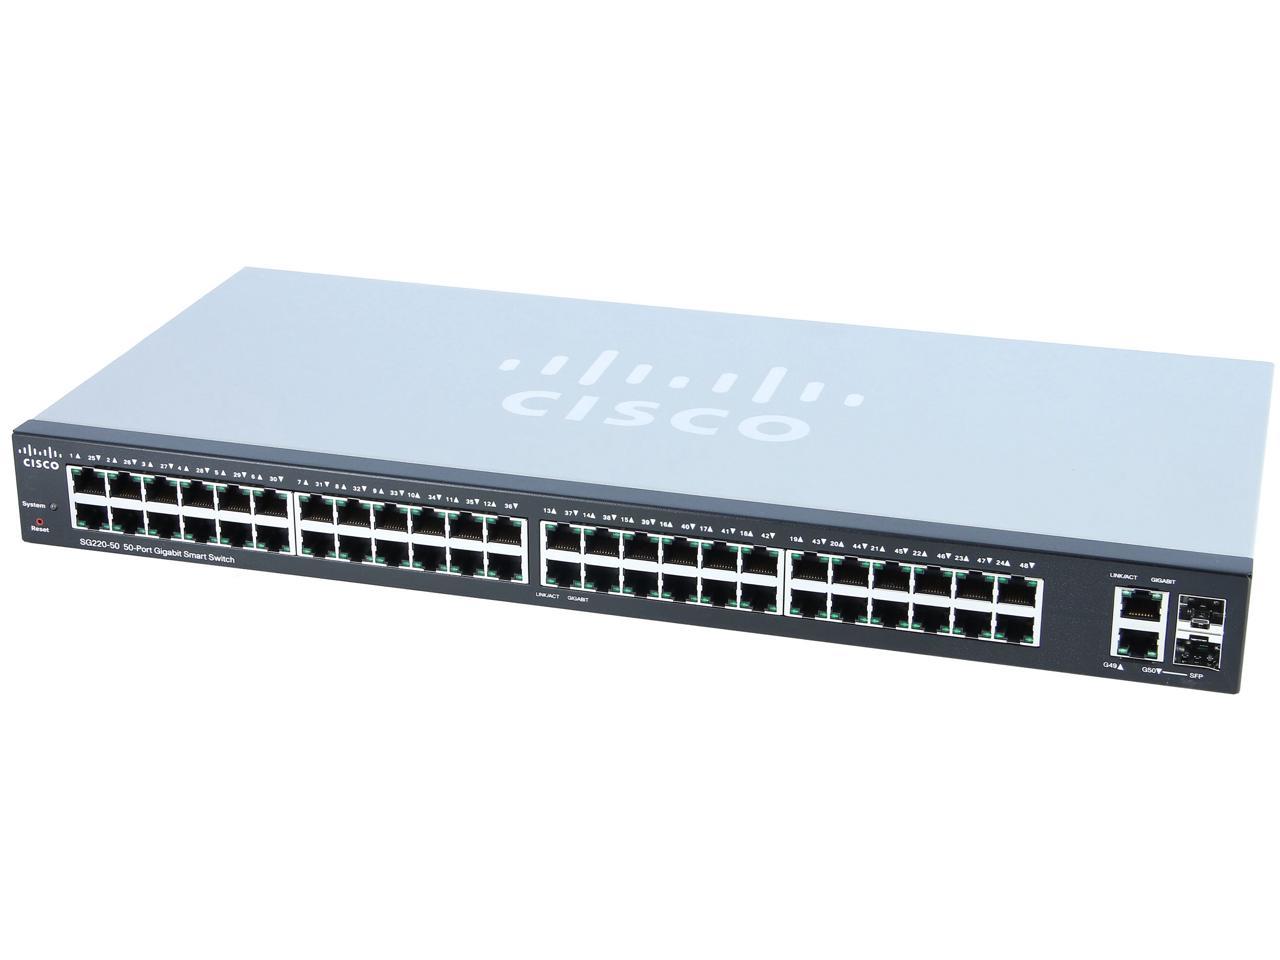 Cisco 220 Series SG220-50P - Switch - Managed - 48 x 10/100/1000 (PoE) + 2 x combo Gigabit SFP - desktop, rack-mountable